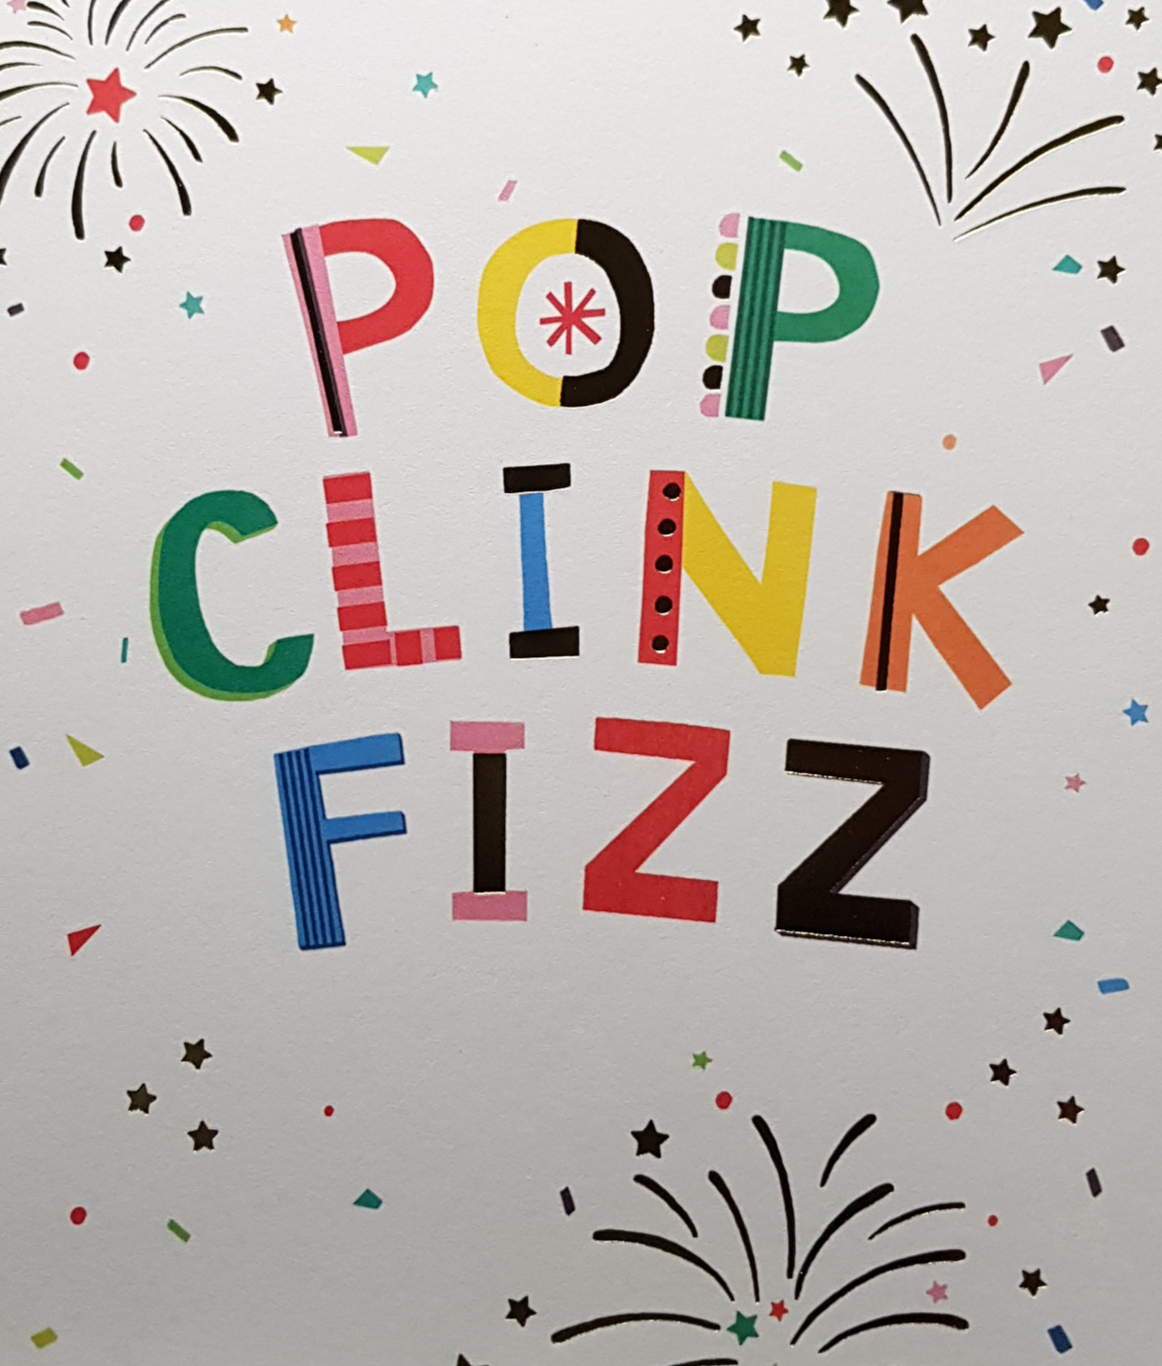 New Year Card - 'Pop Clink Fizz' & Cute Firework Illustrations